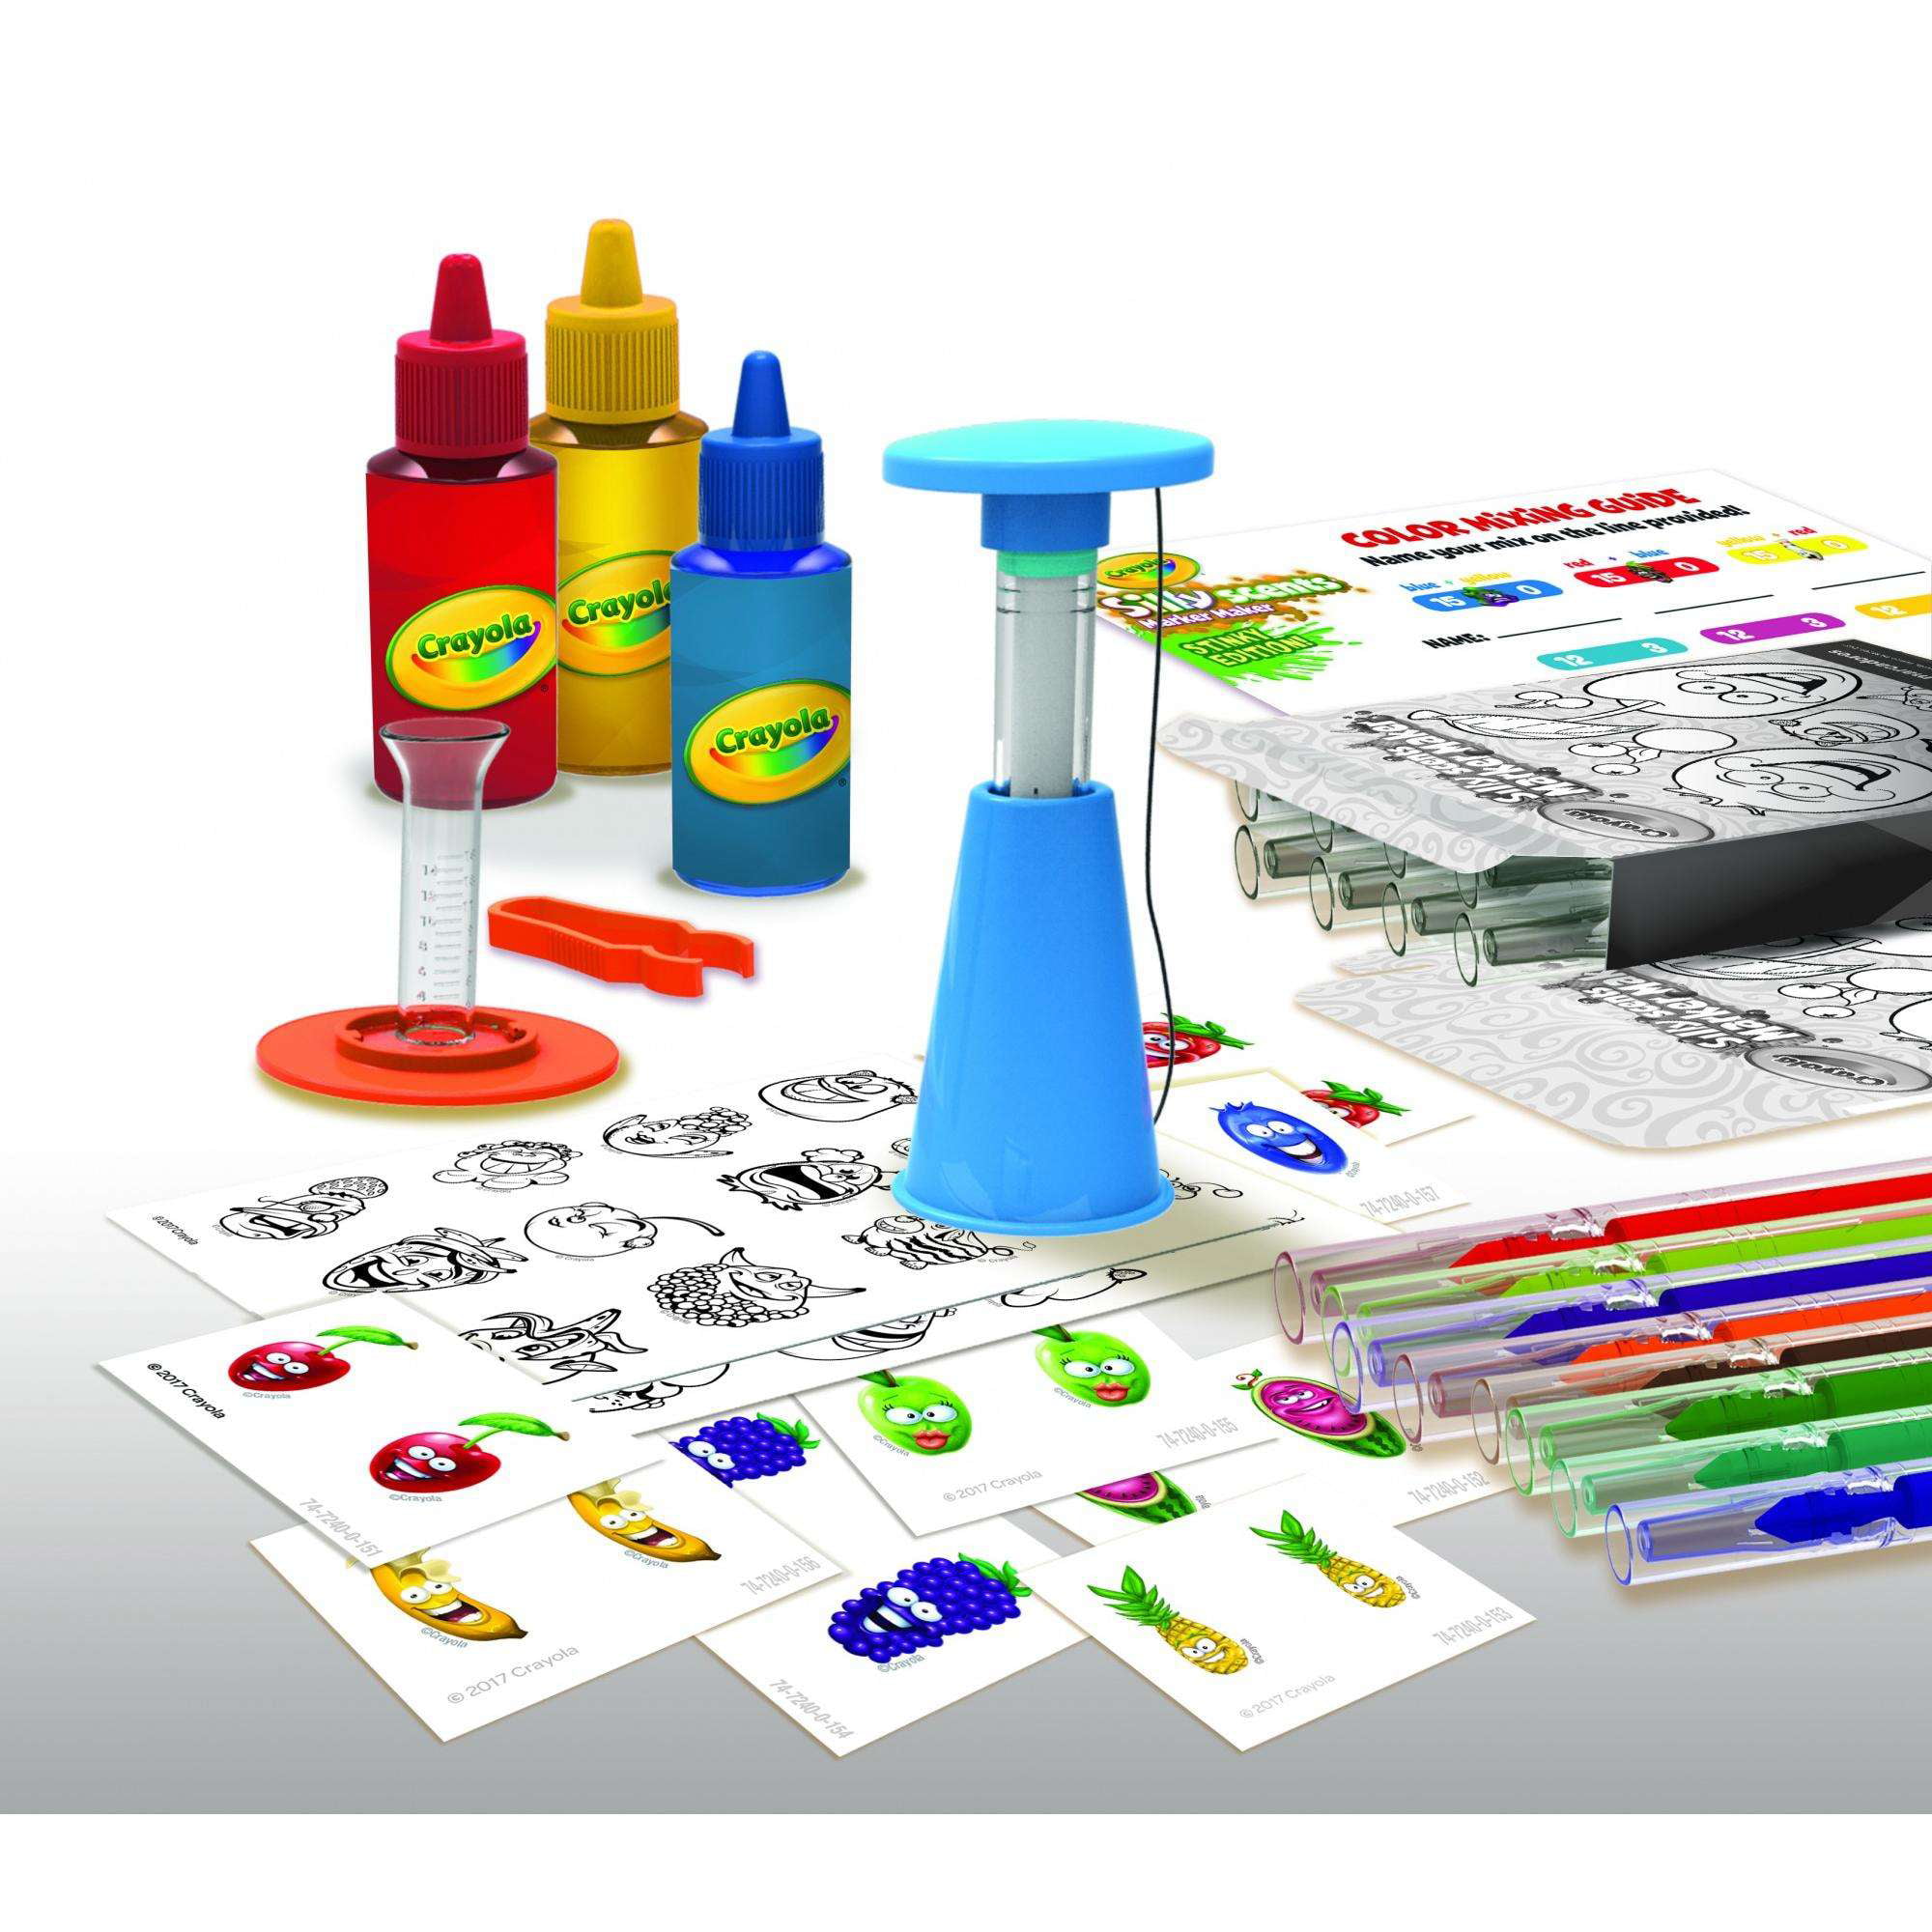 .com: Crayola Mini Neon Marker Maker, 36 Scented Markers